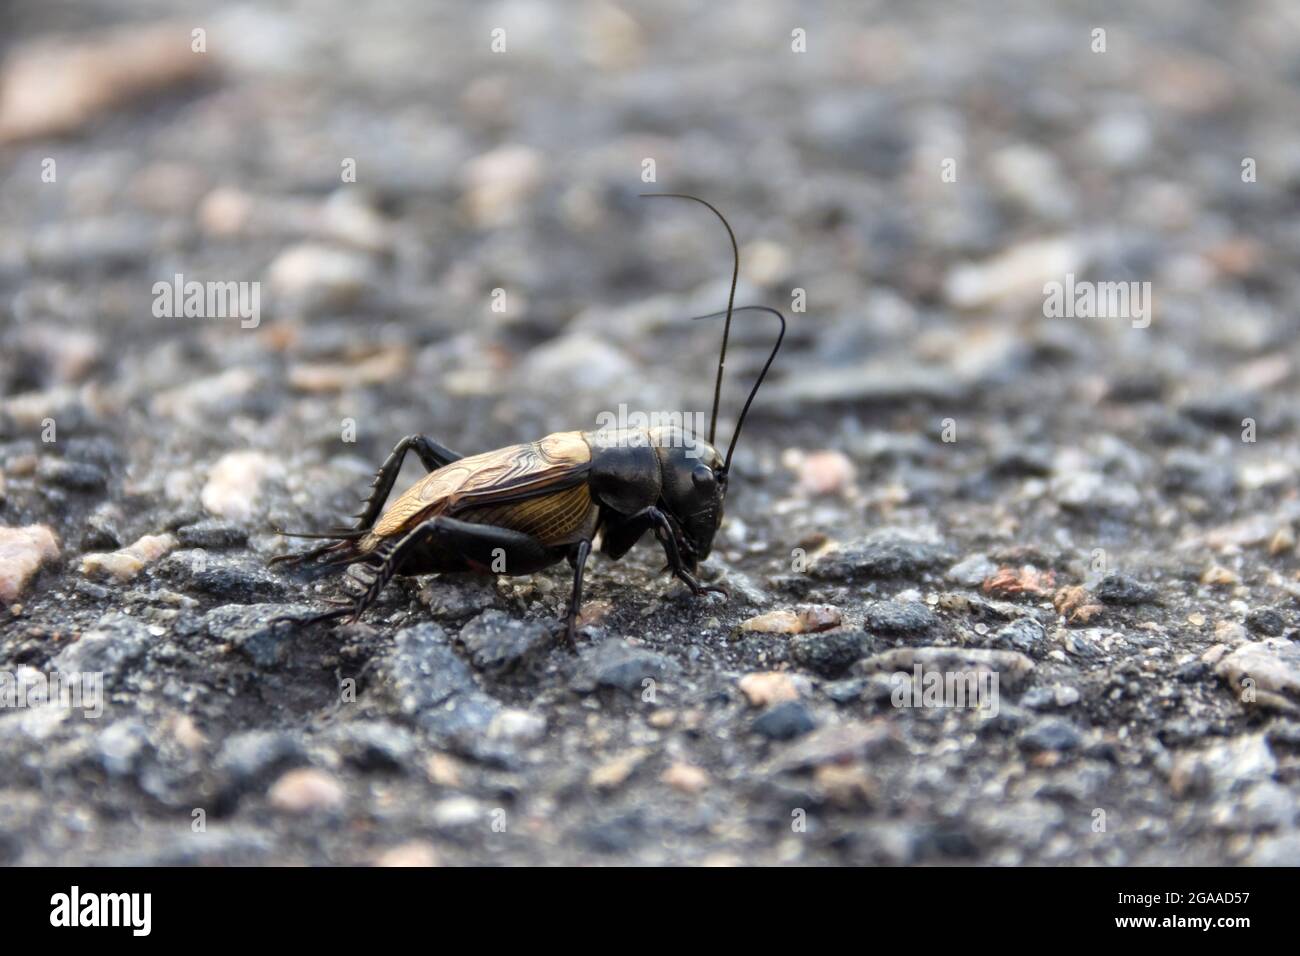 Close up of field cricket on gray background. Closeup foto, macro close up.  Stock Photo